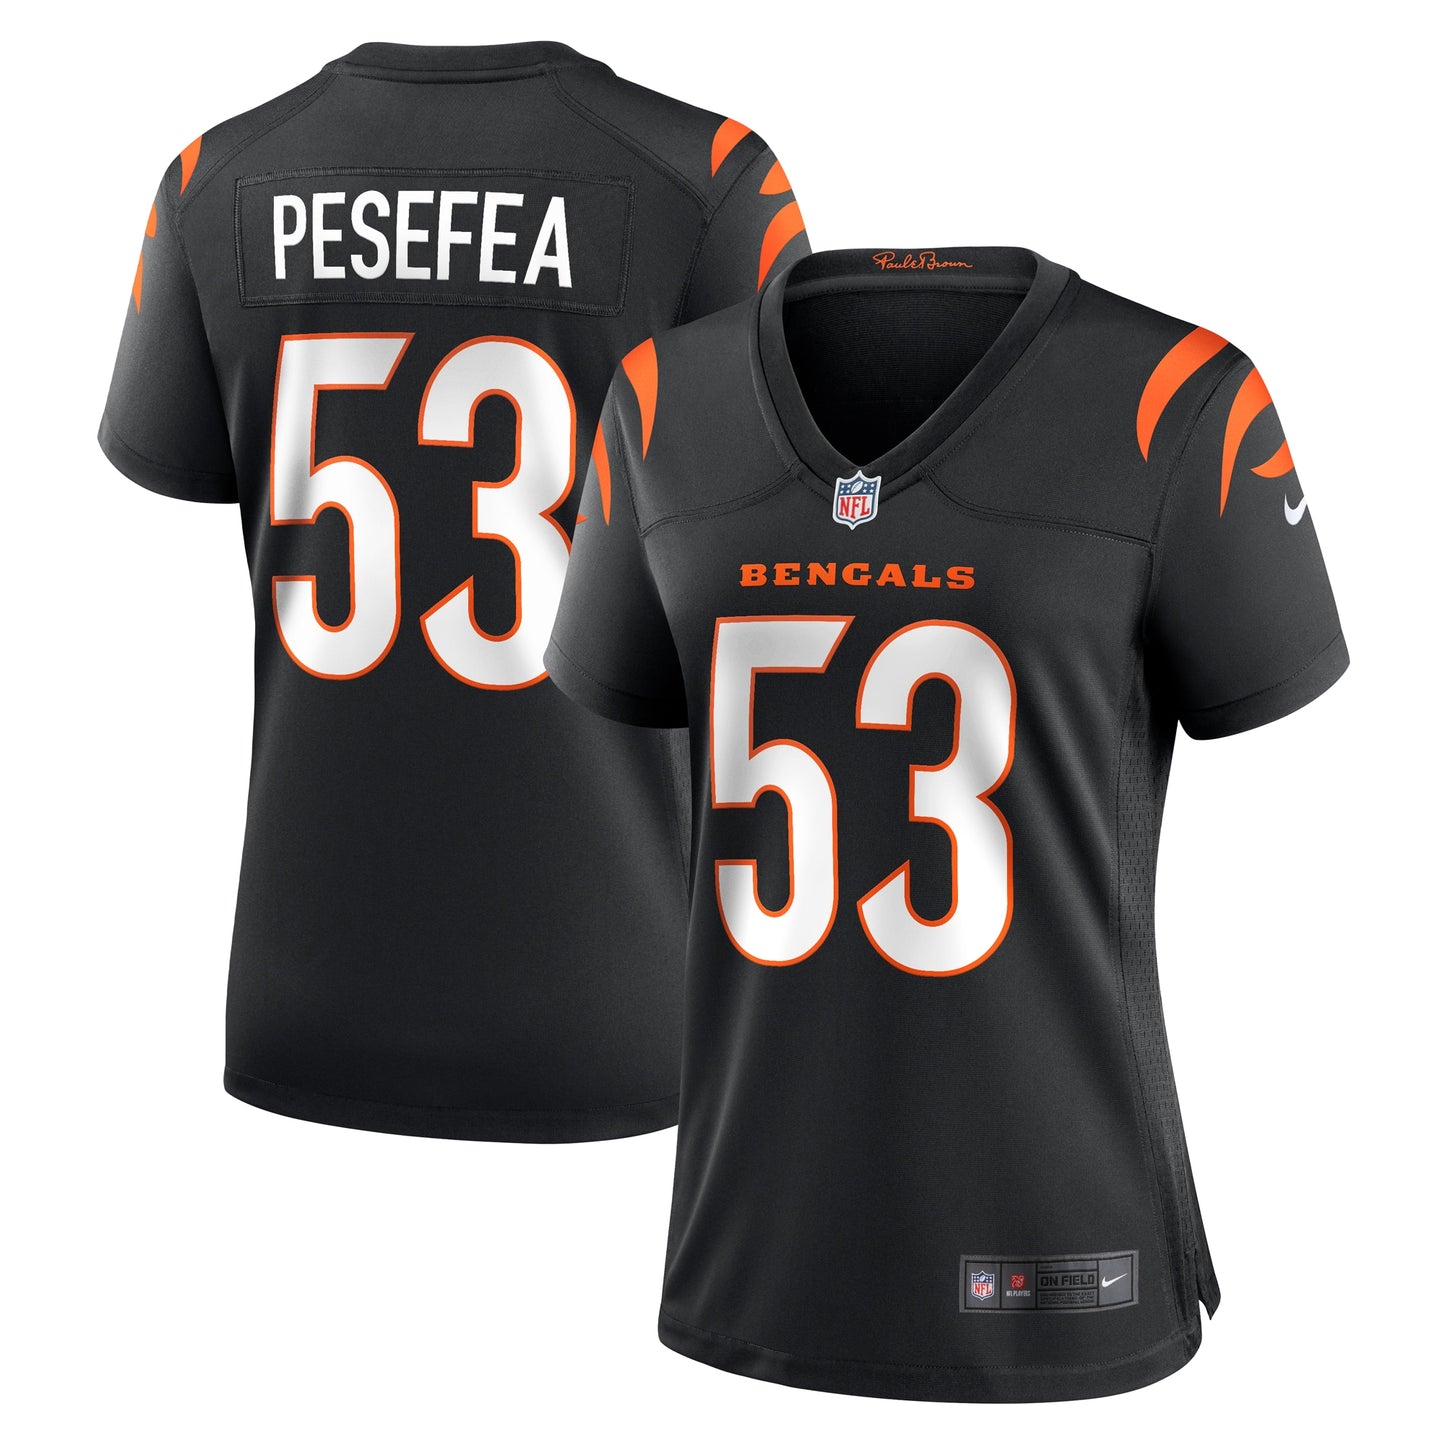 TJ Pesefea Cincinnati Bengals Nike Women's Team Game Jersey -  Black